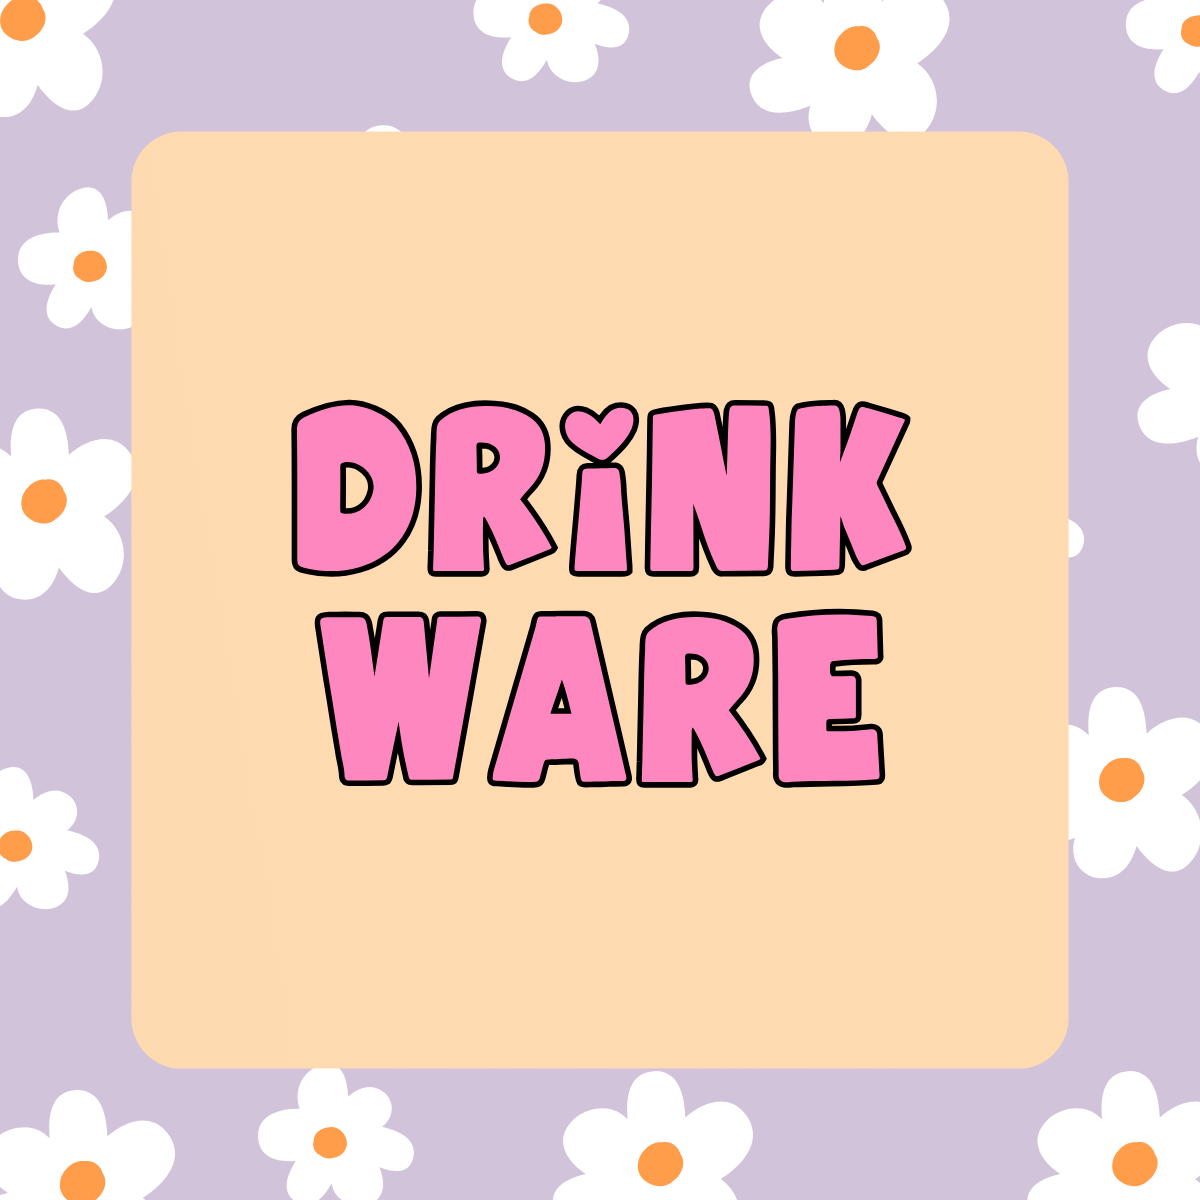 Drinkware